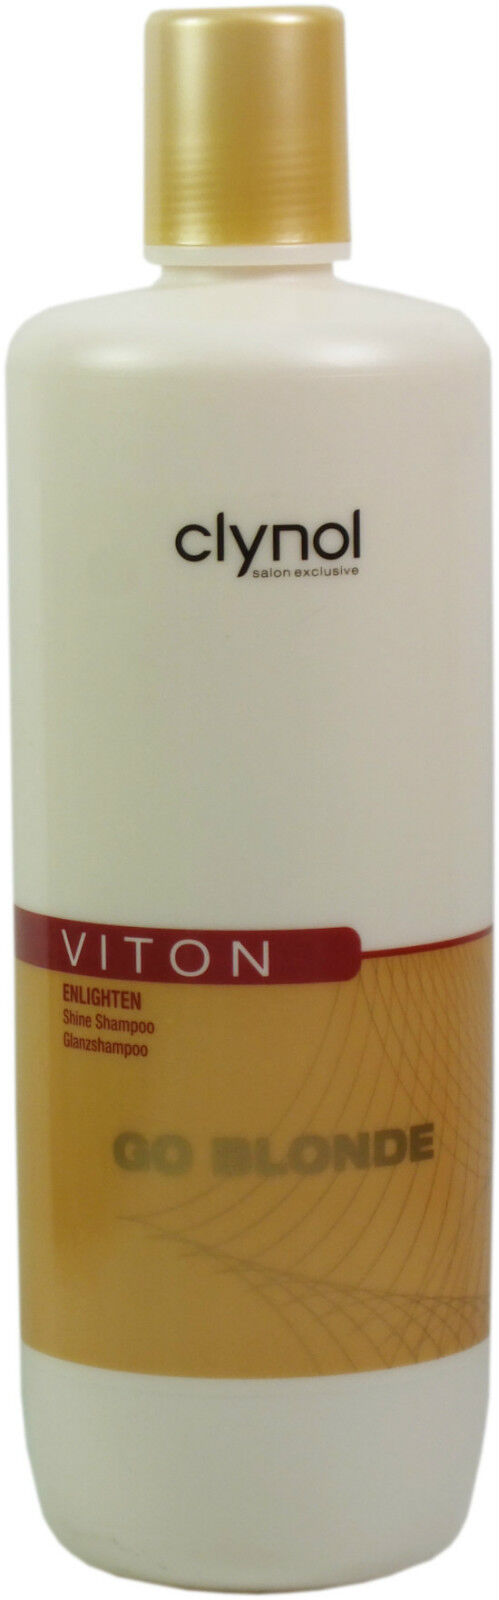 Clynol Viton Go Blonde Enlighten Shine Shampoo 1 Litre